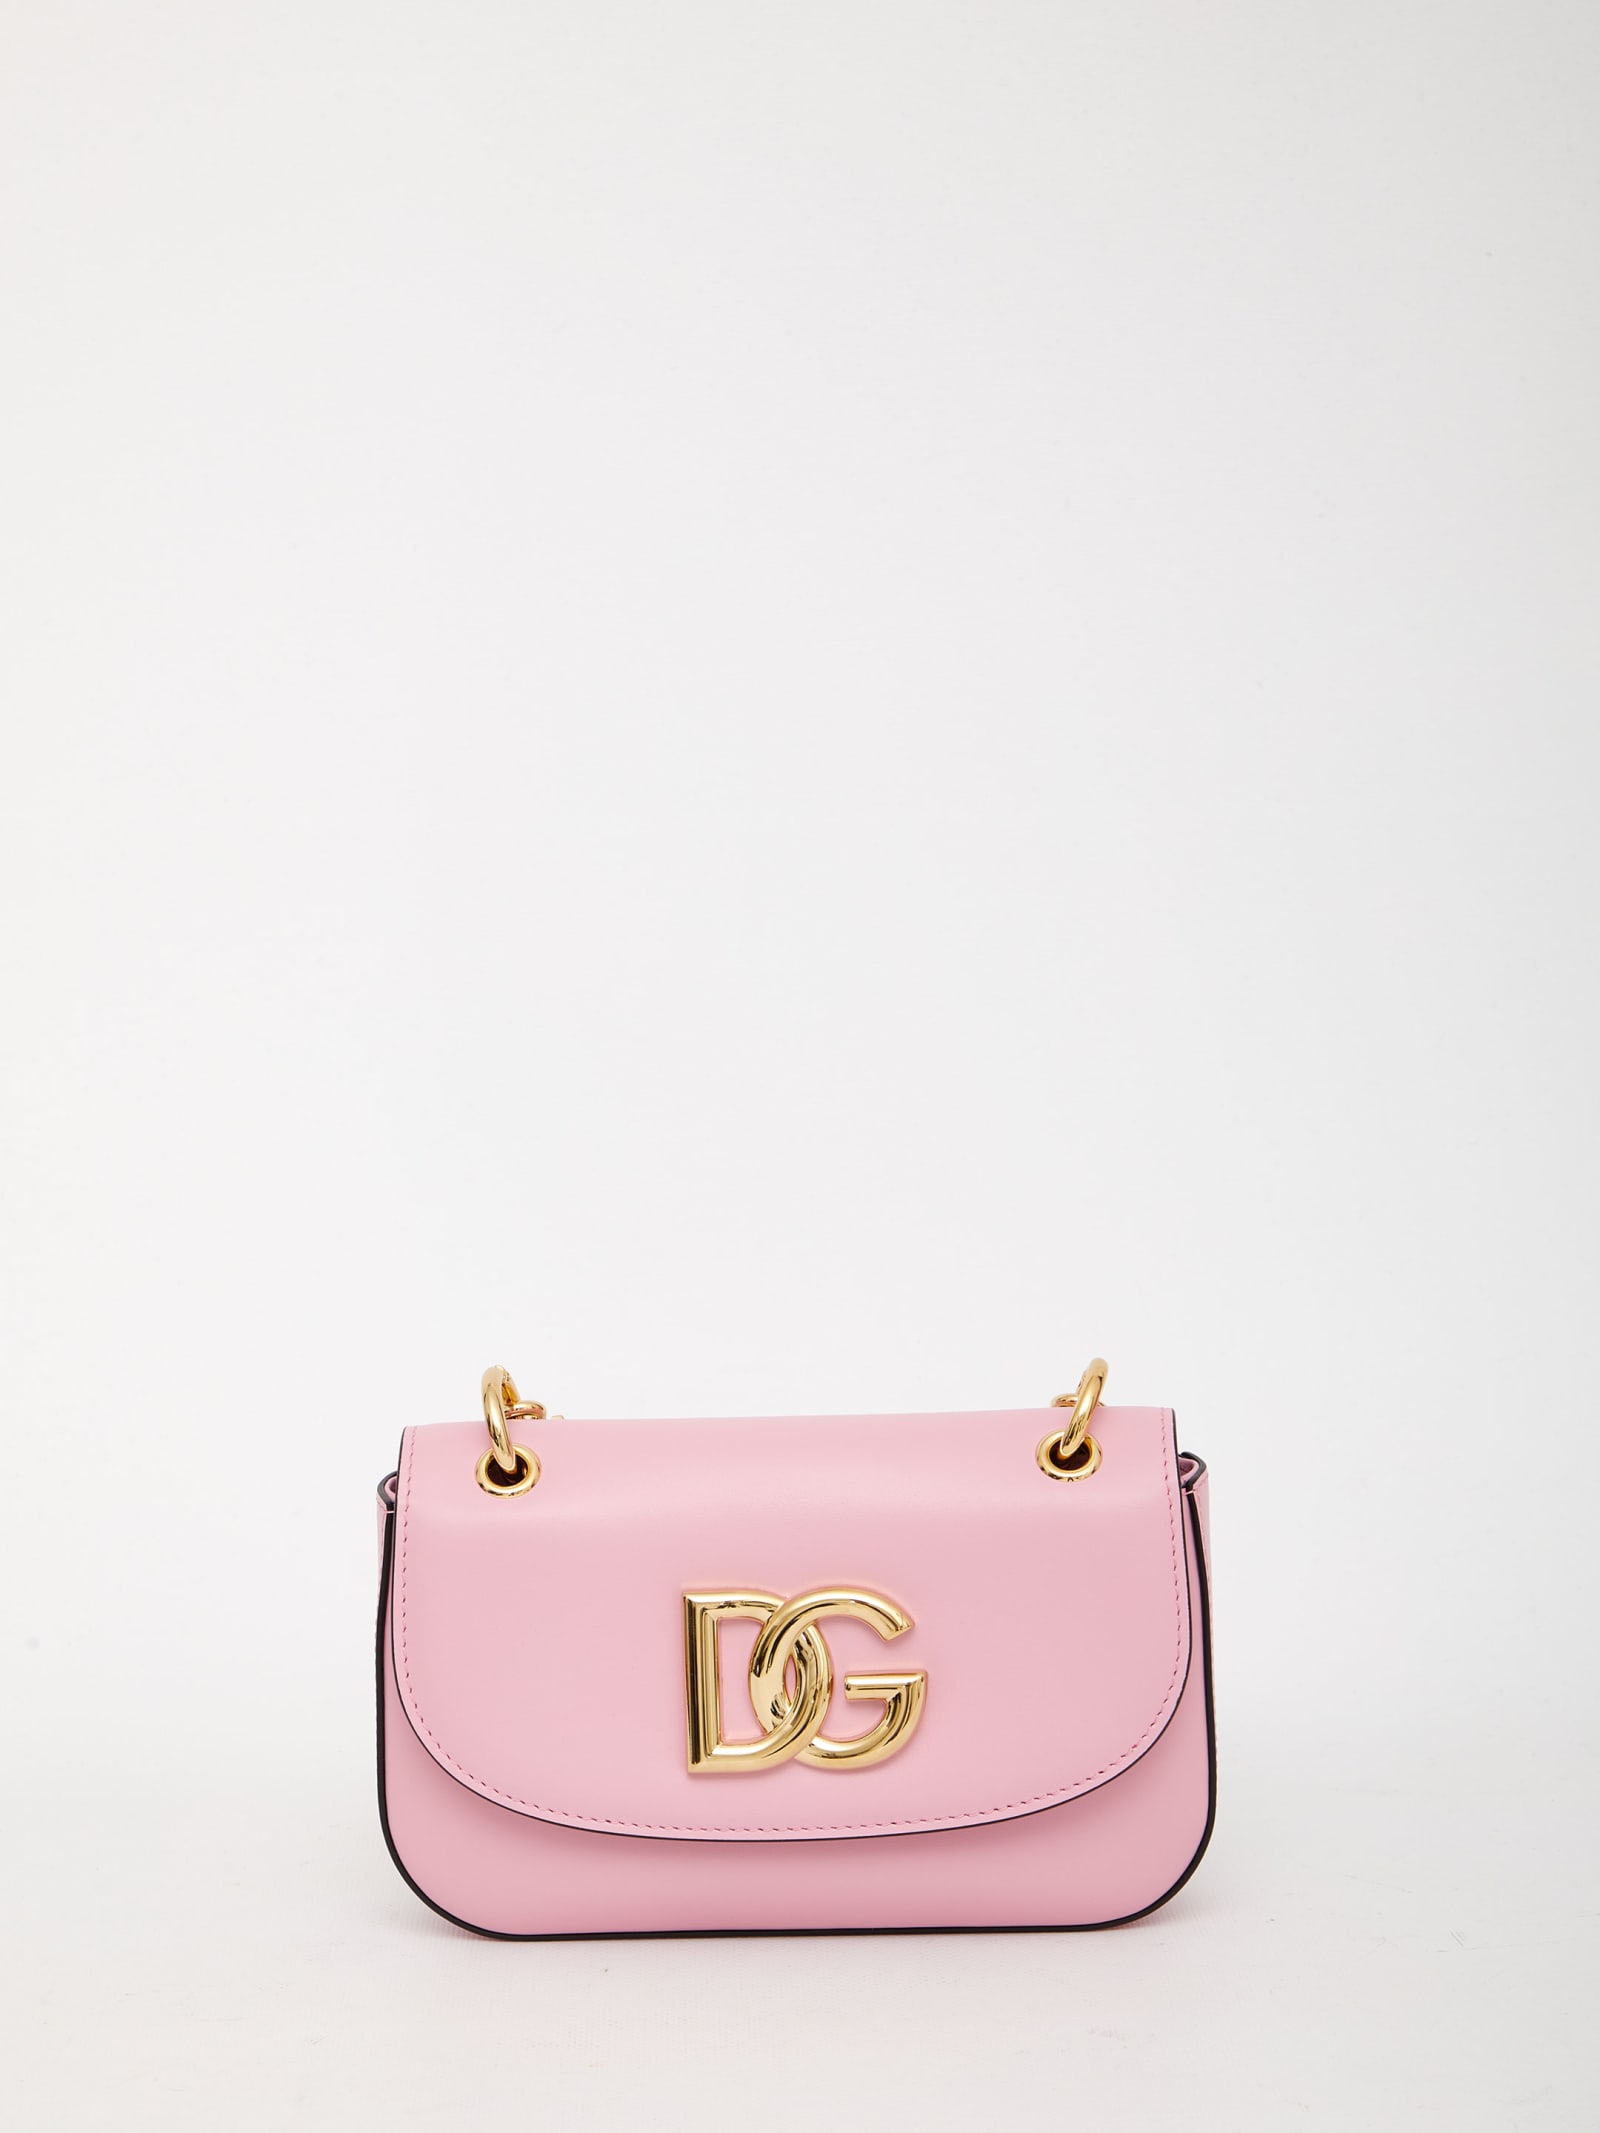 Dolce & Gabbana 3.5 Pink Leather Bag